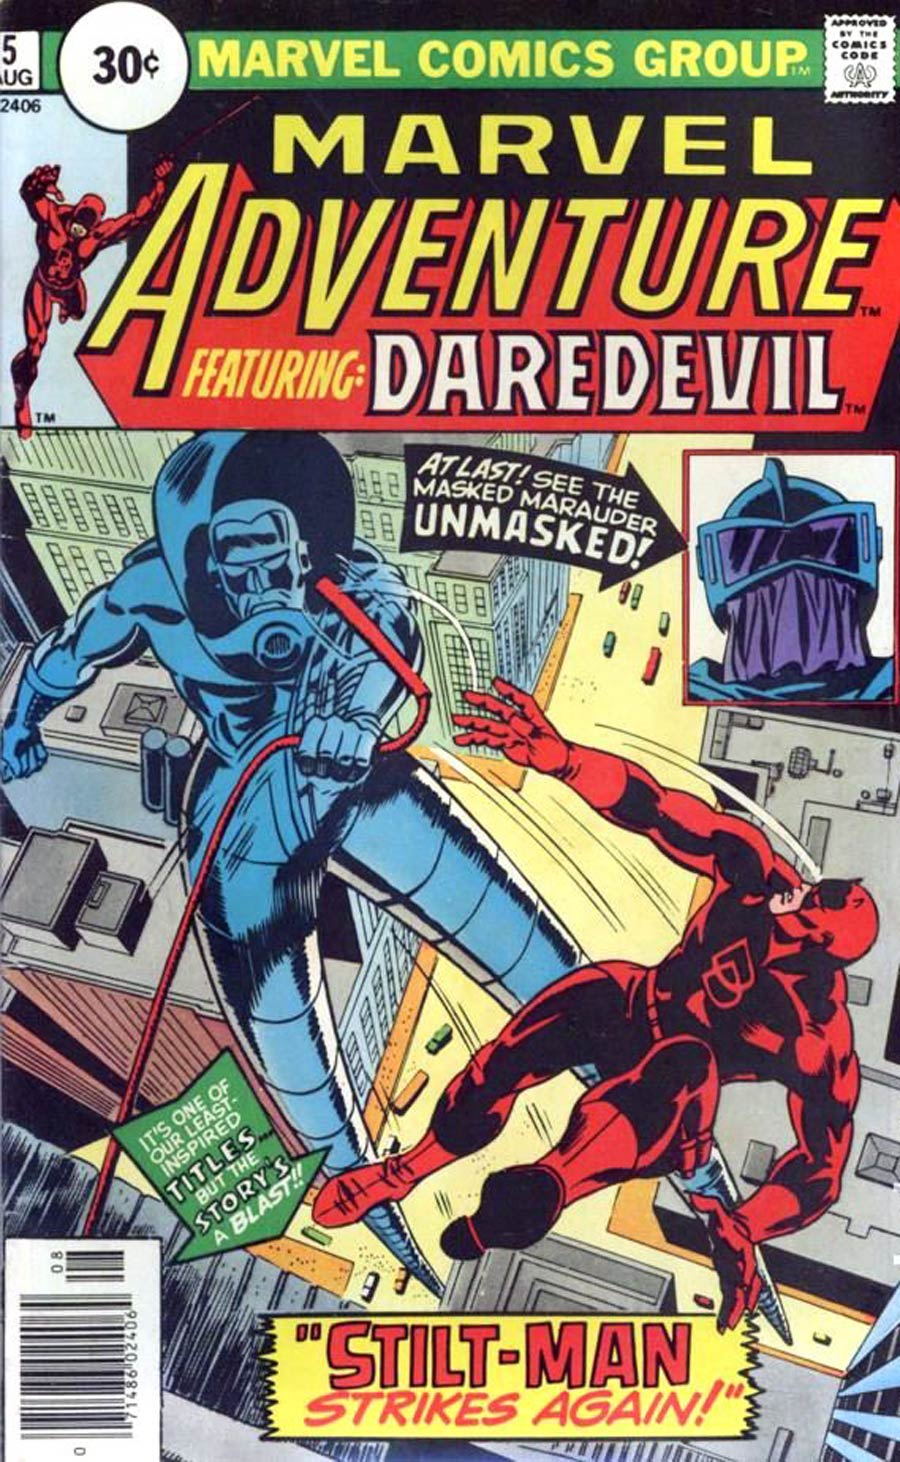 Marvel Adventure Featuring Daredevil #5 Cover B 30 Cent Variant